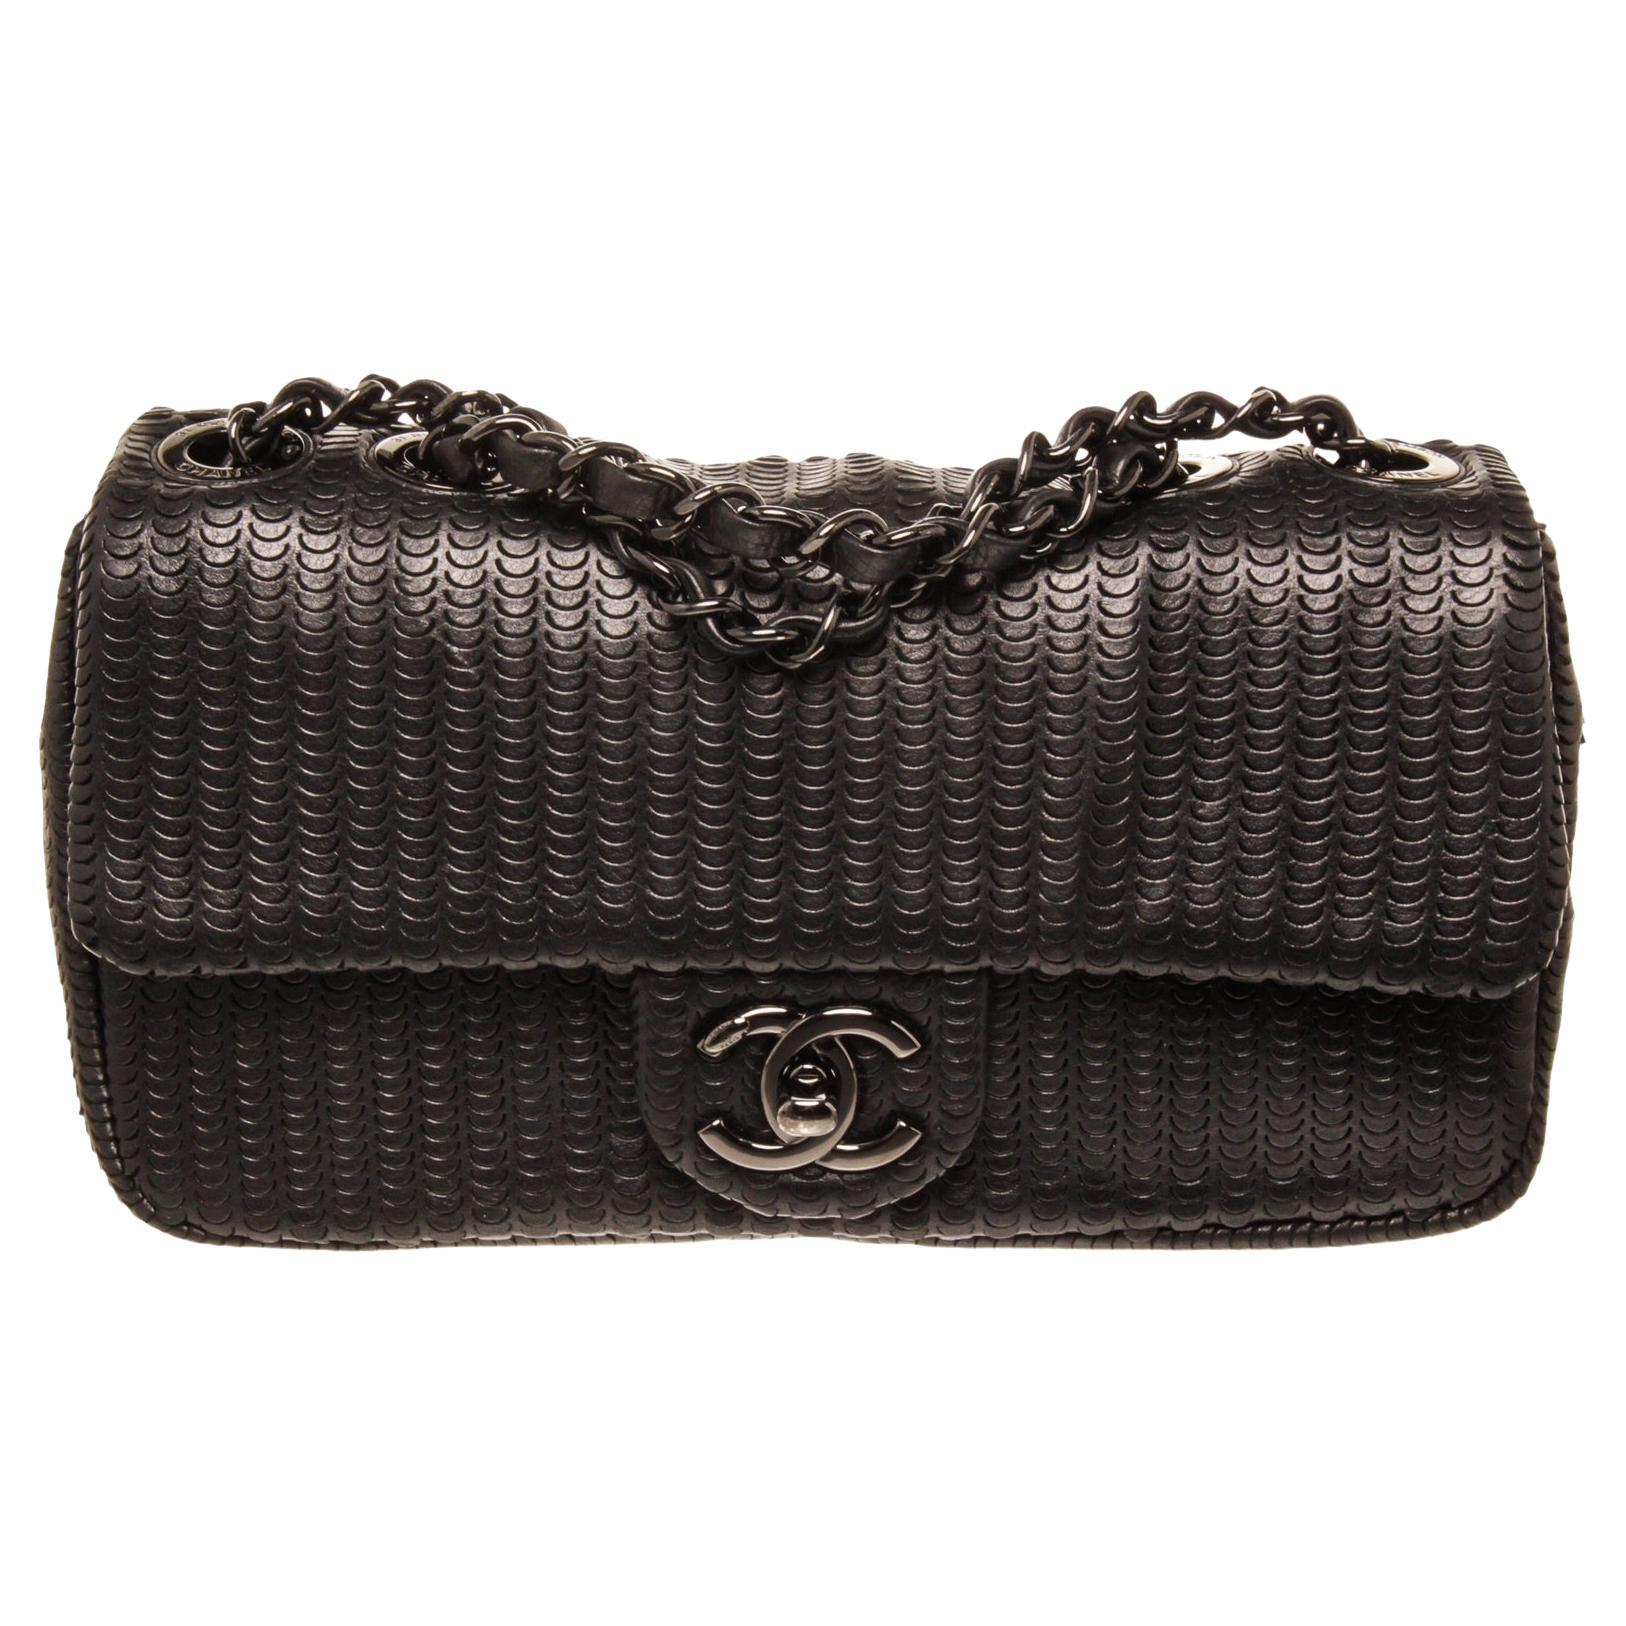 Chanel Black Leather Scallop Classic Shoulder Bag